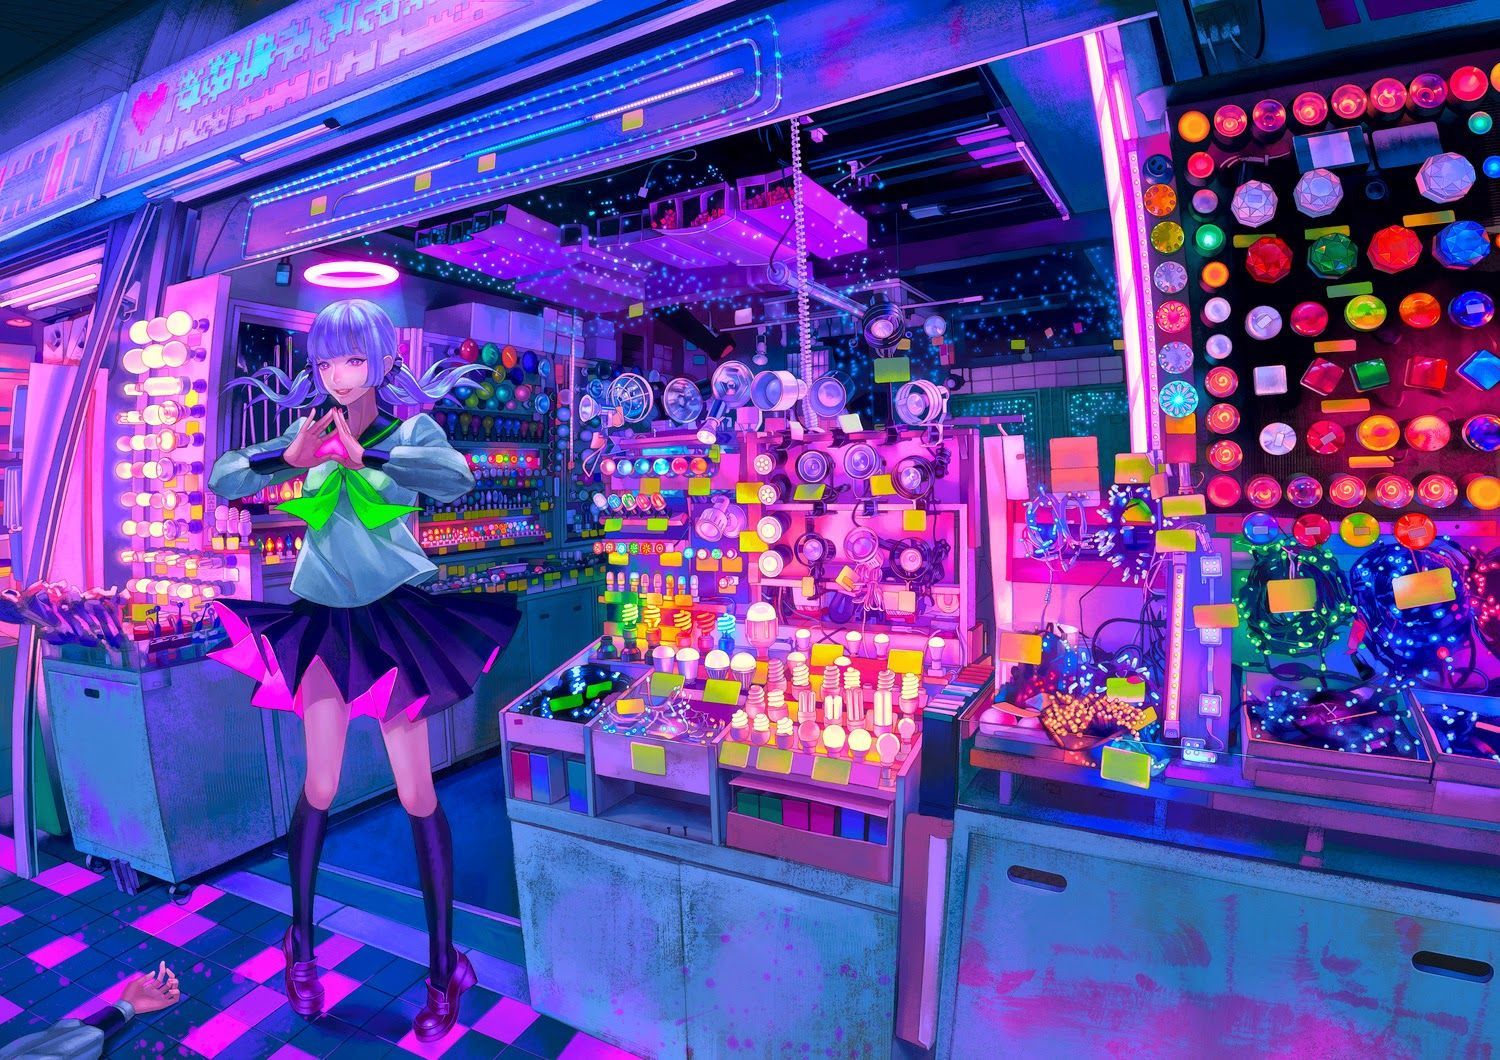 Anime Girl Wallpaper Neon Wallpaper HD